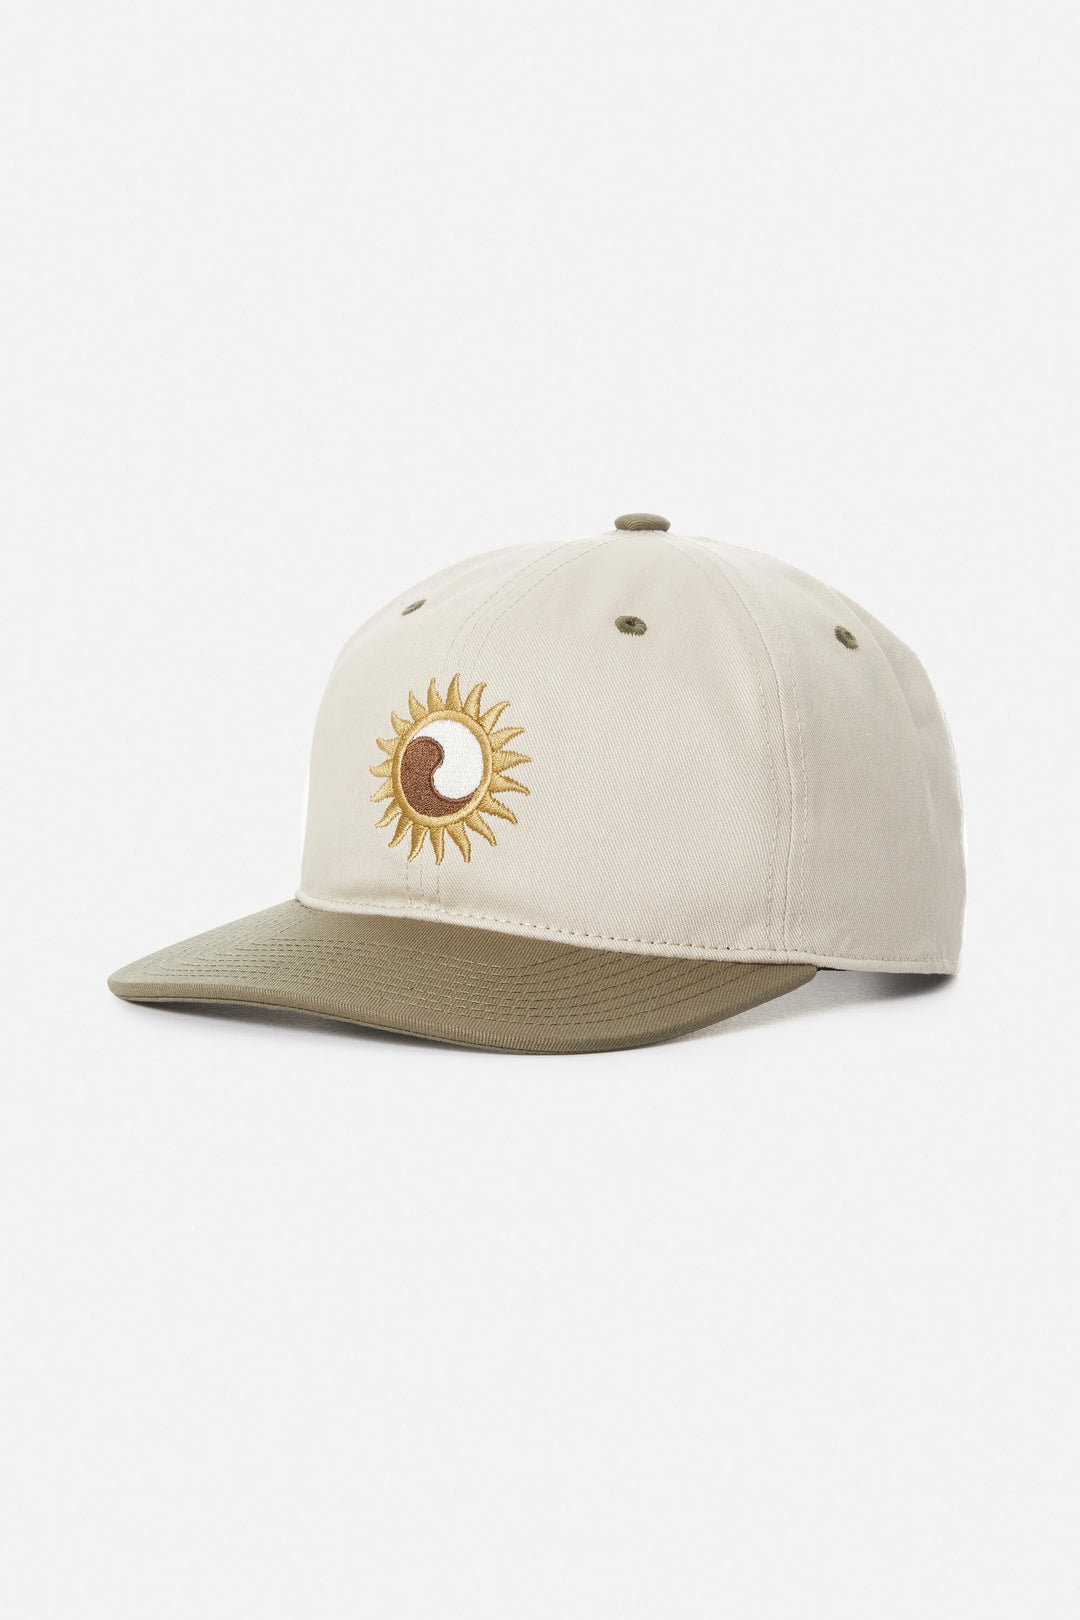 Men's Sunfire Hat